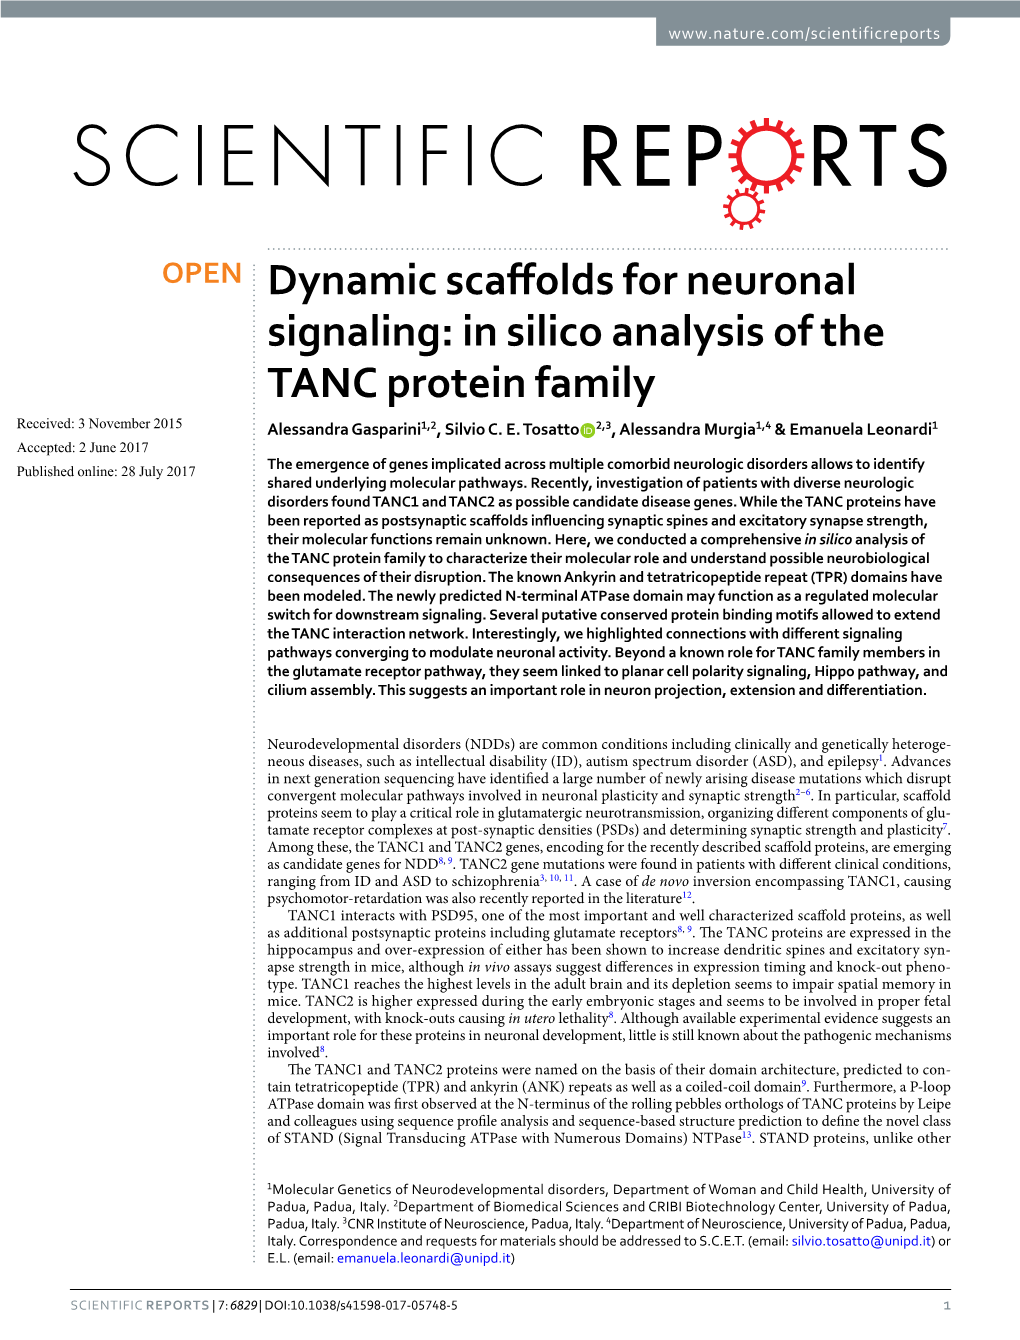 In Silico Analysis of the TANC Protein Family Received: 3 November 2015 Alessandra Gasparini1,2, Silvio C